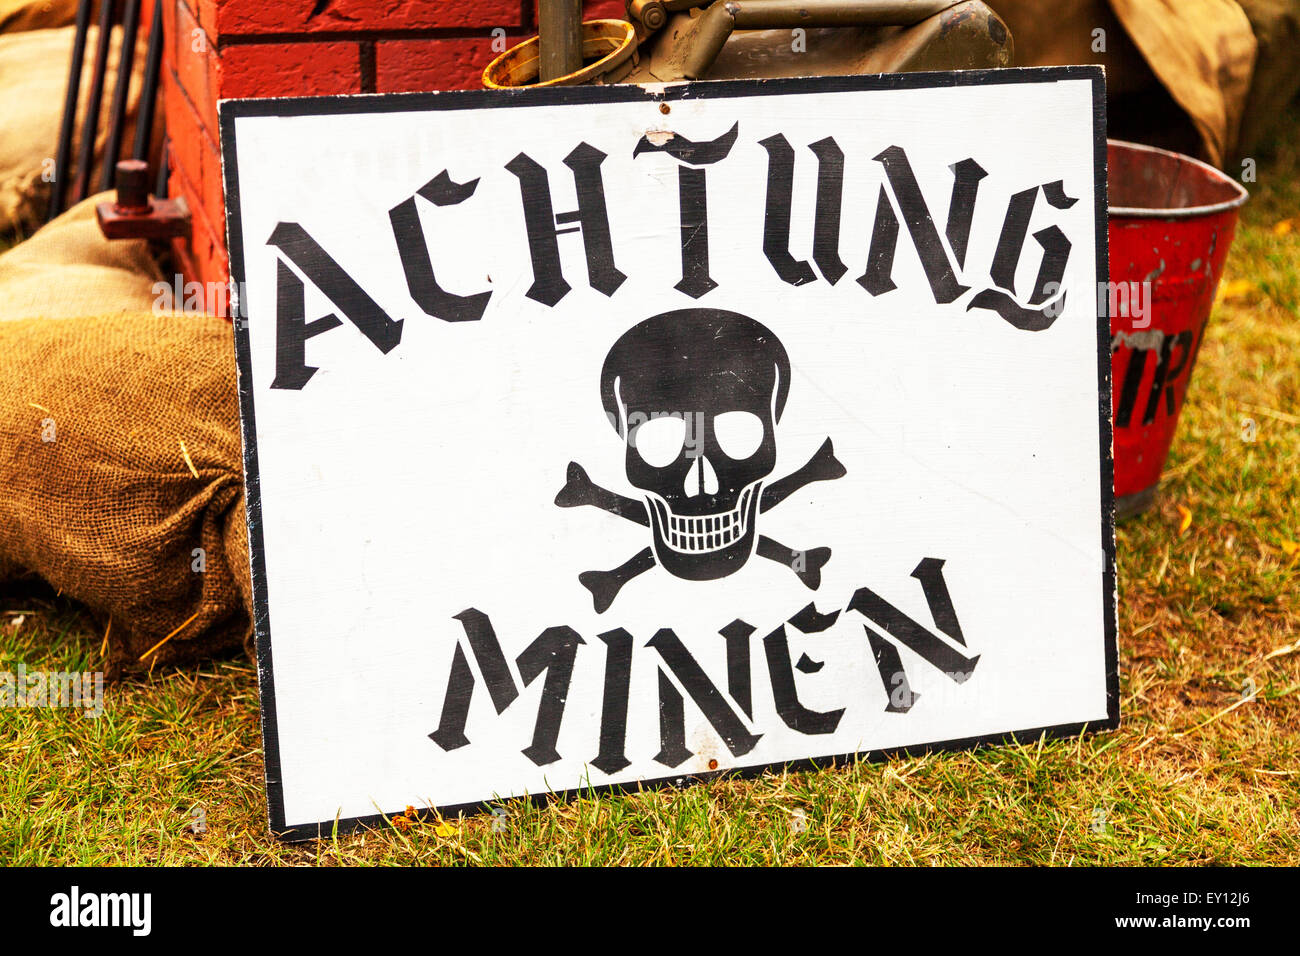 Danger mine field landmines landmine sign achtung minen german mines warning war wartime attention Stock Photo